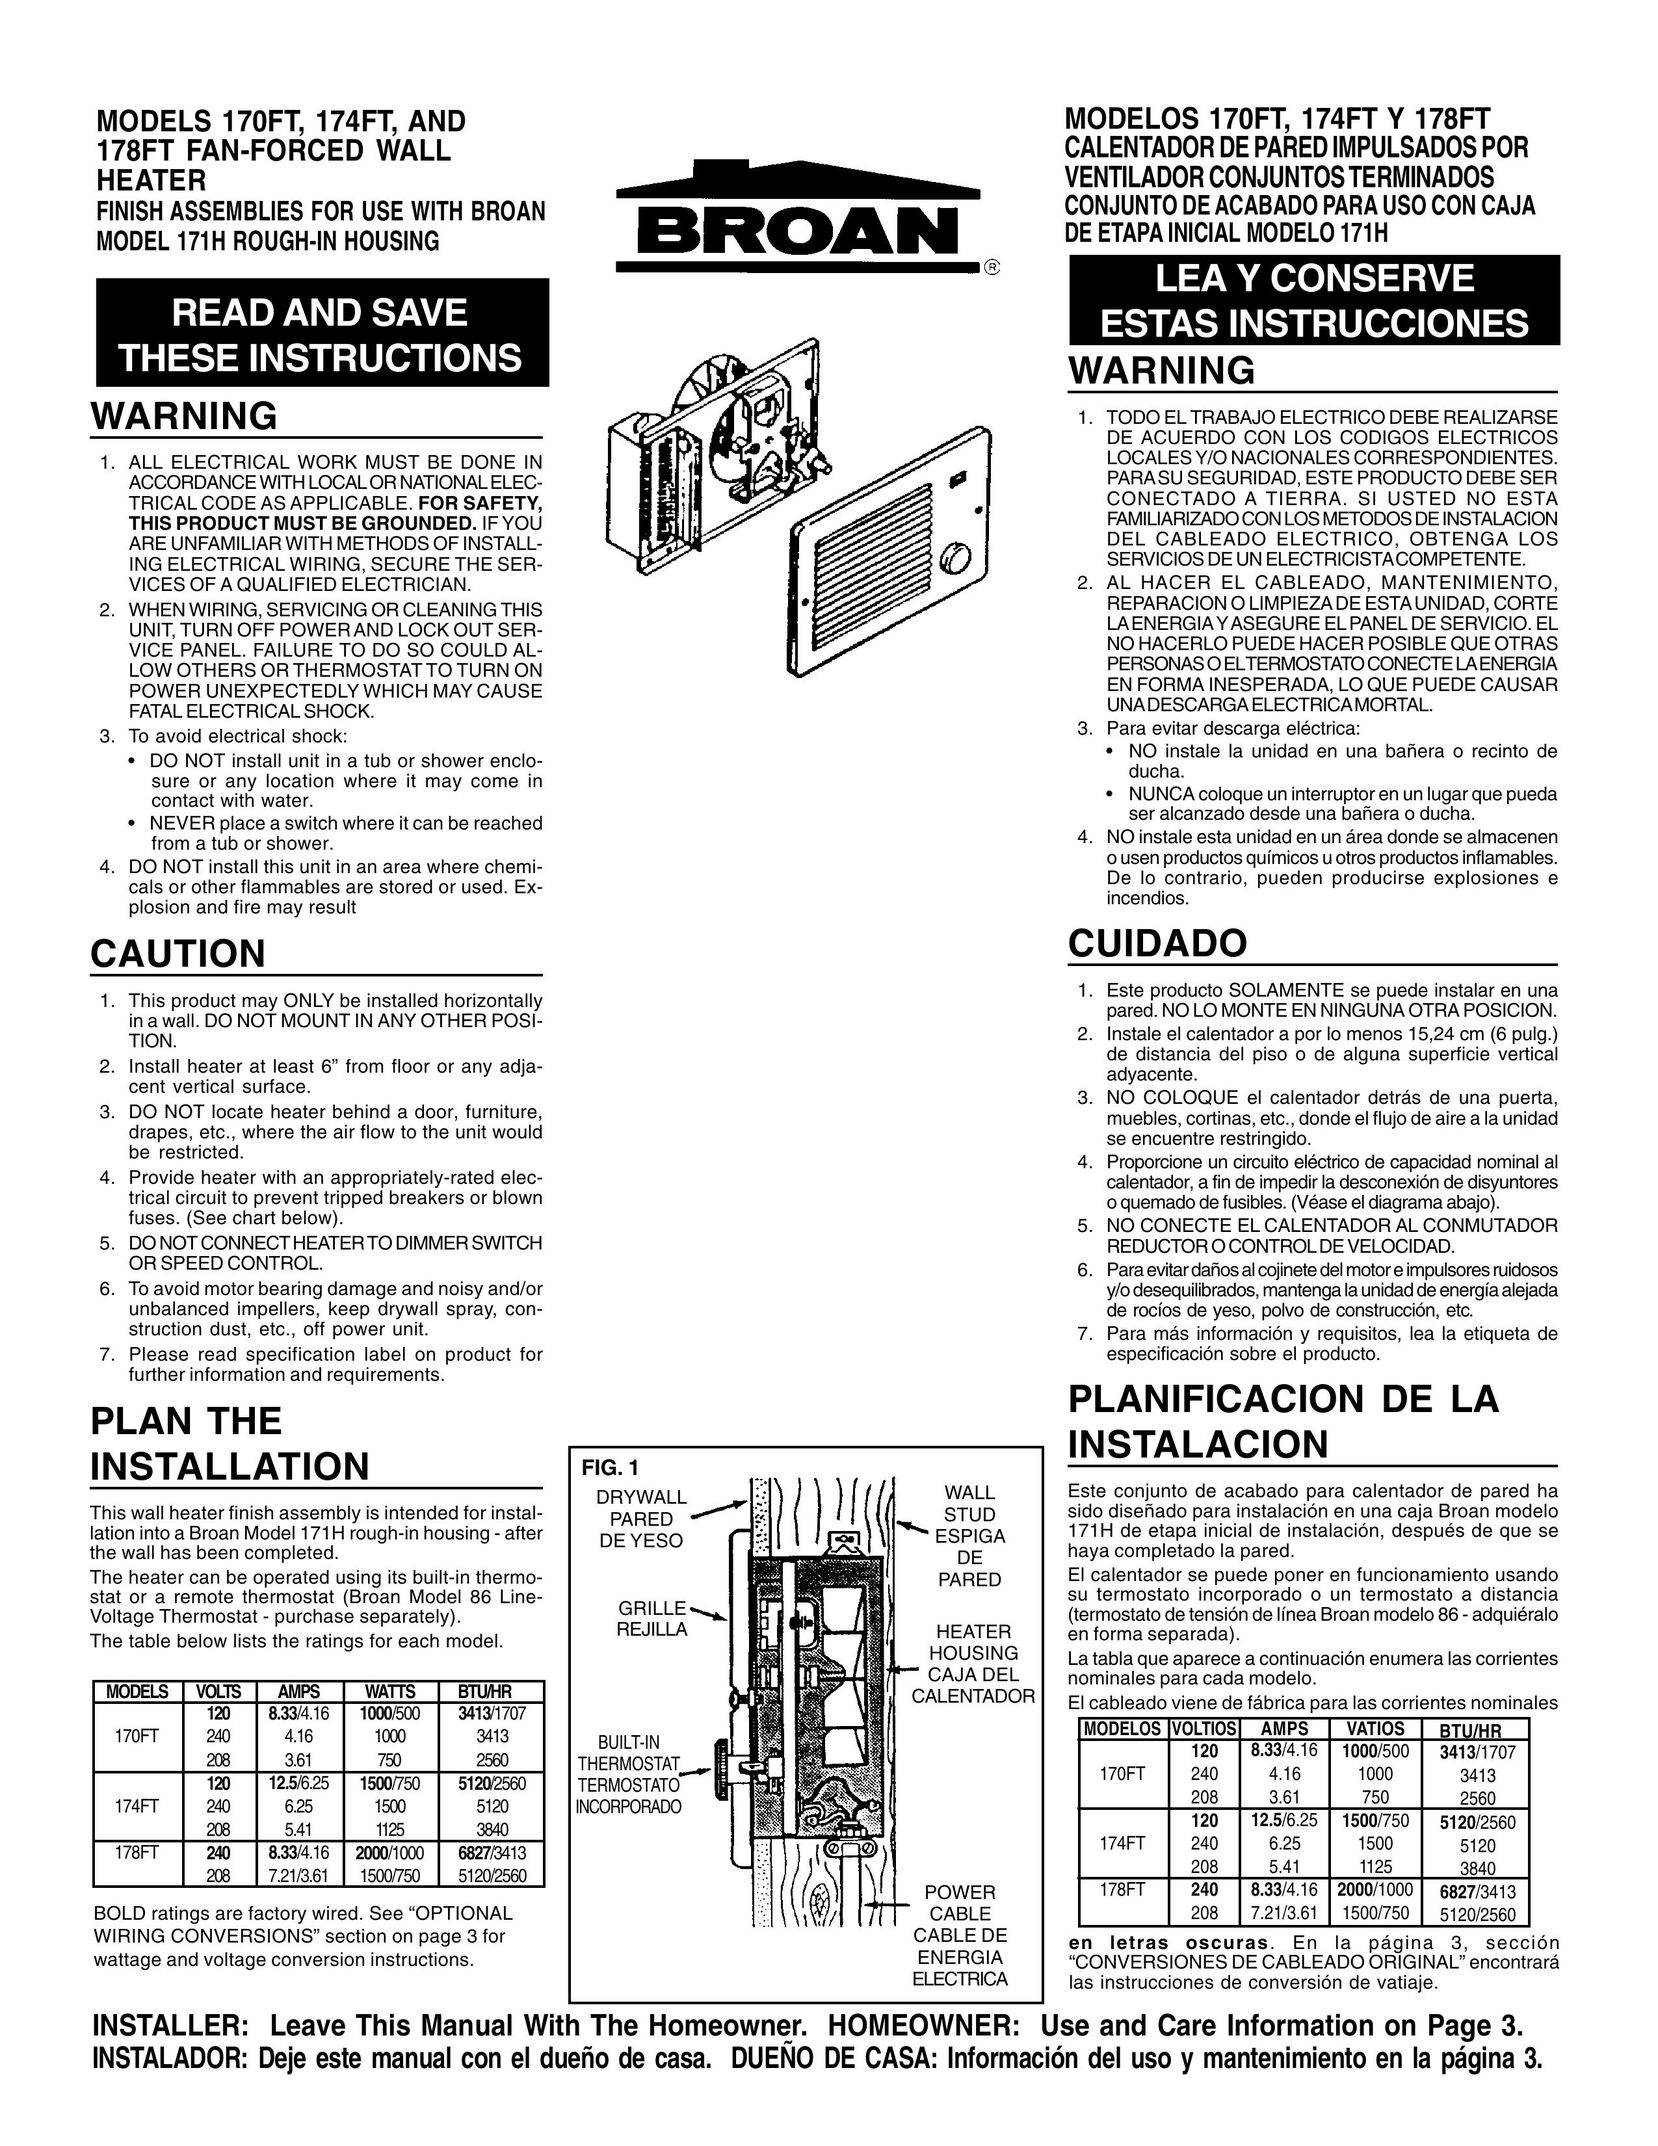 Broan 178FT Air Conditioner User Manual